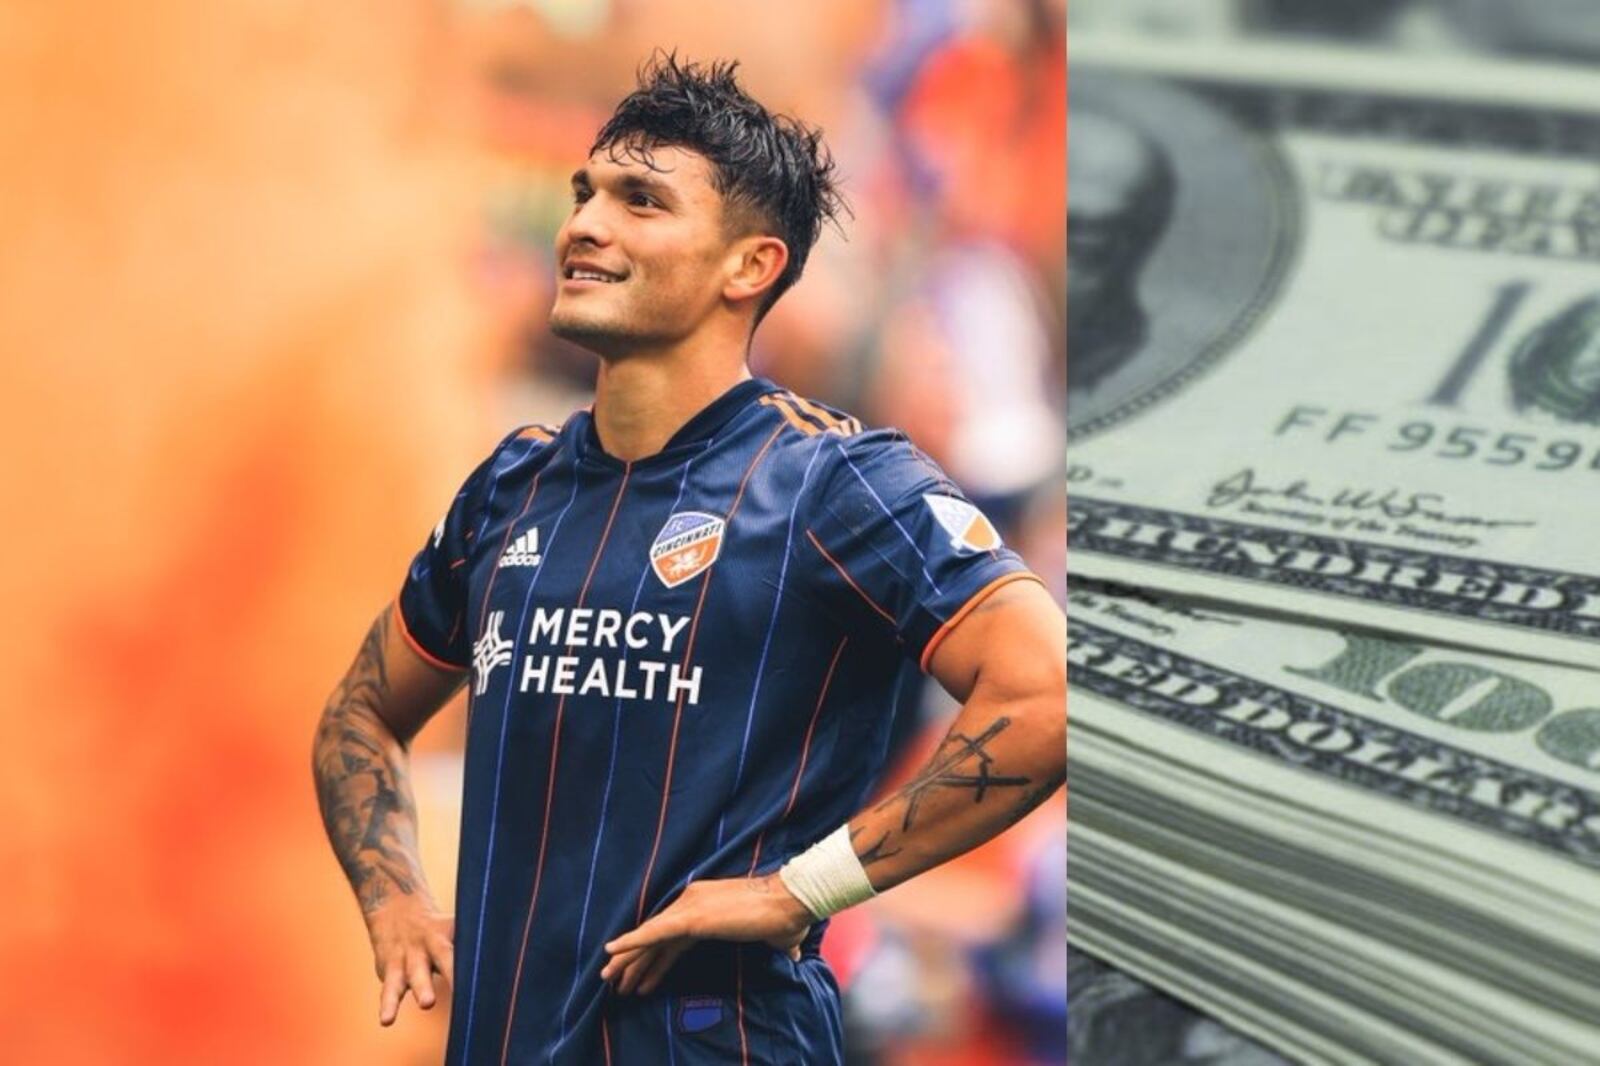 Brandon Vazquez already has a millionaire cost for his great season in MLS